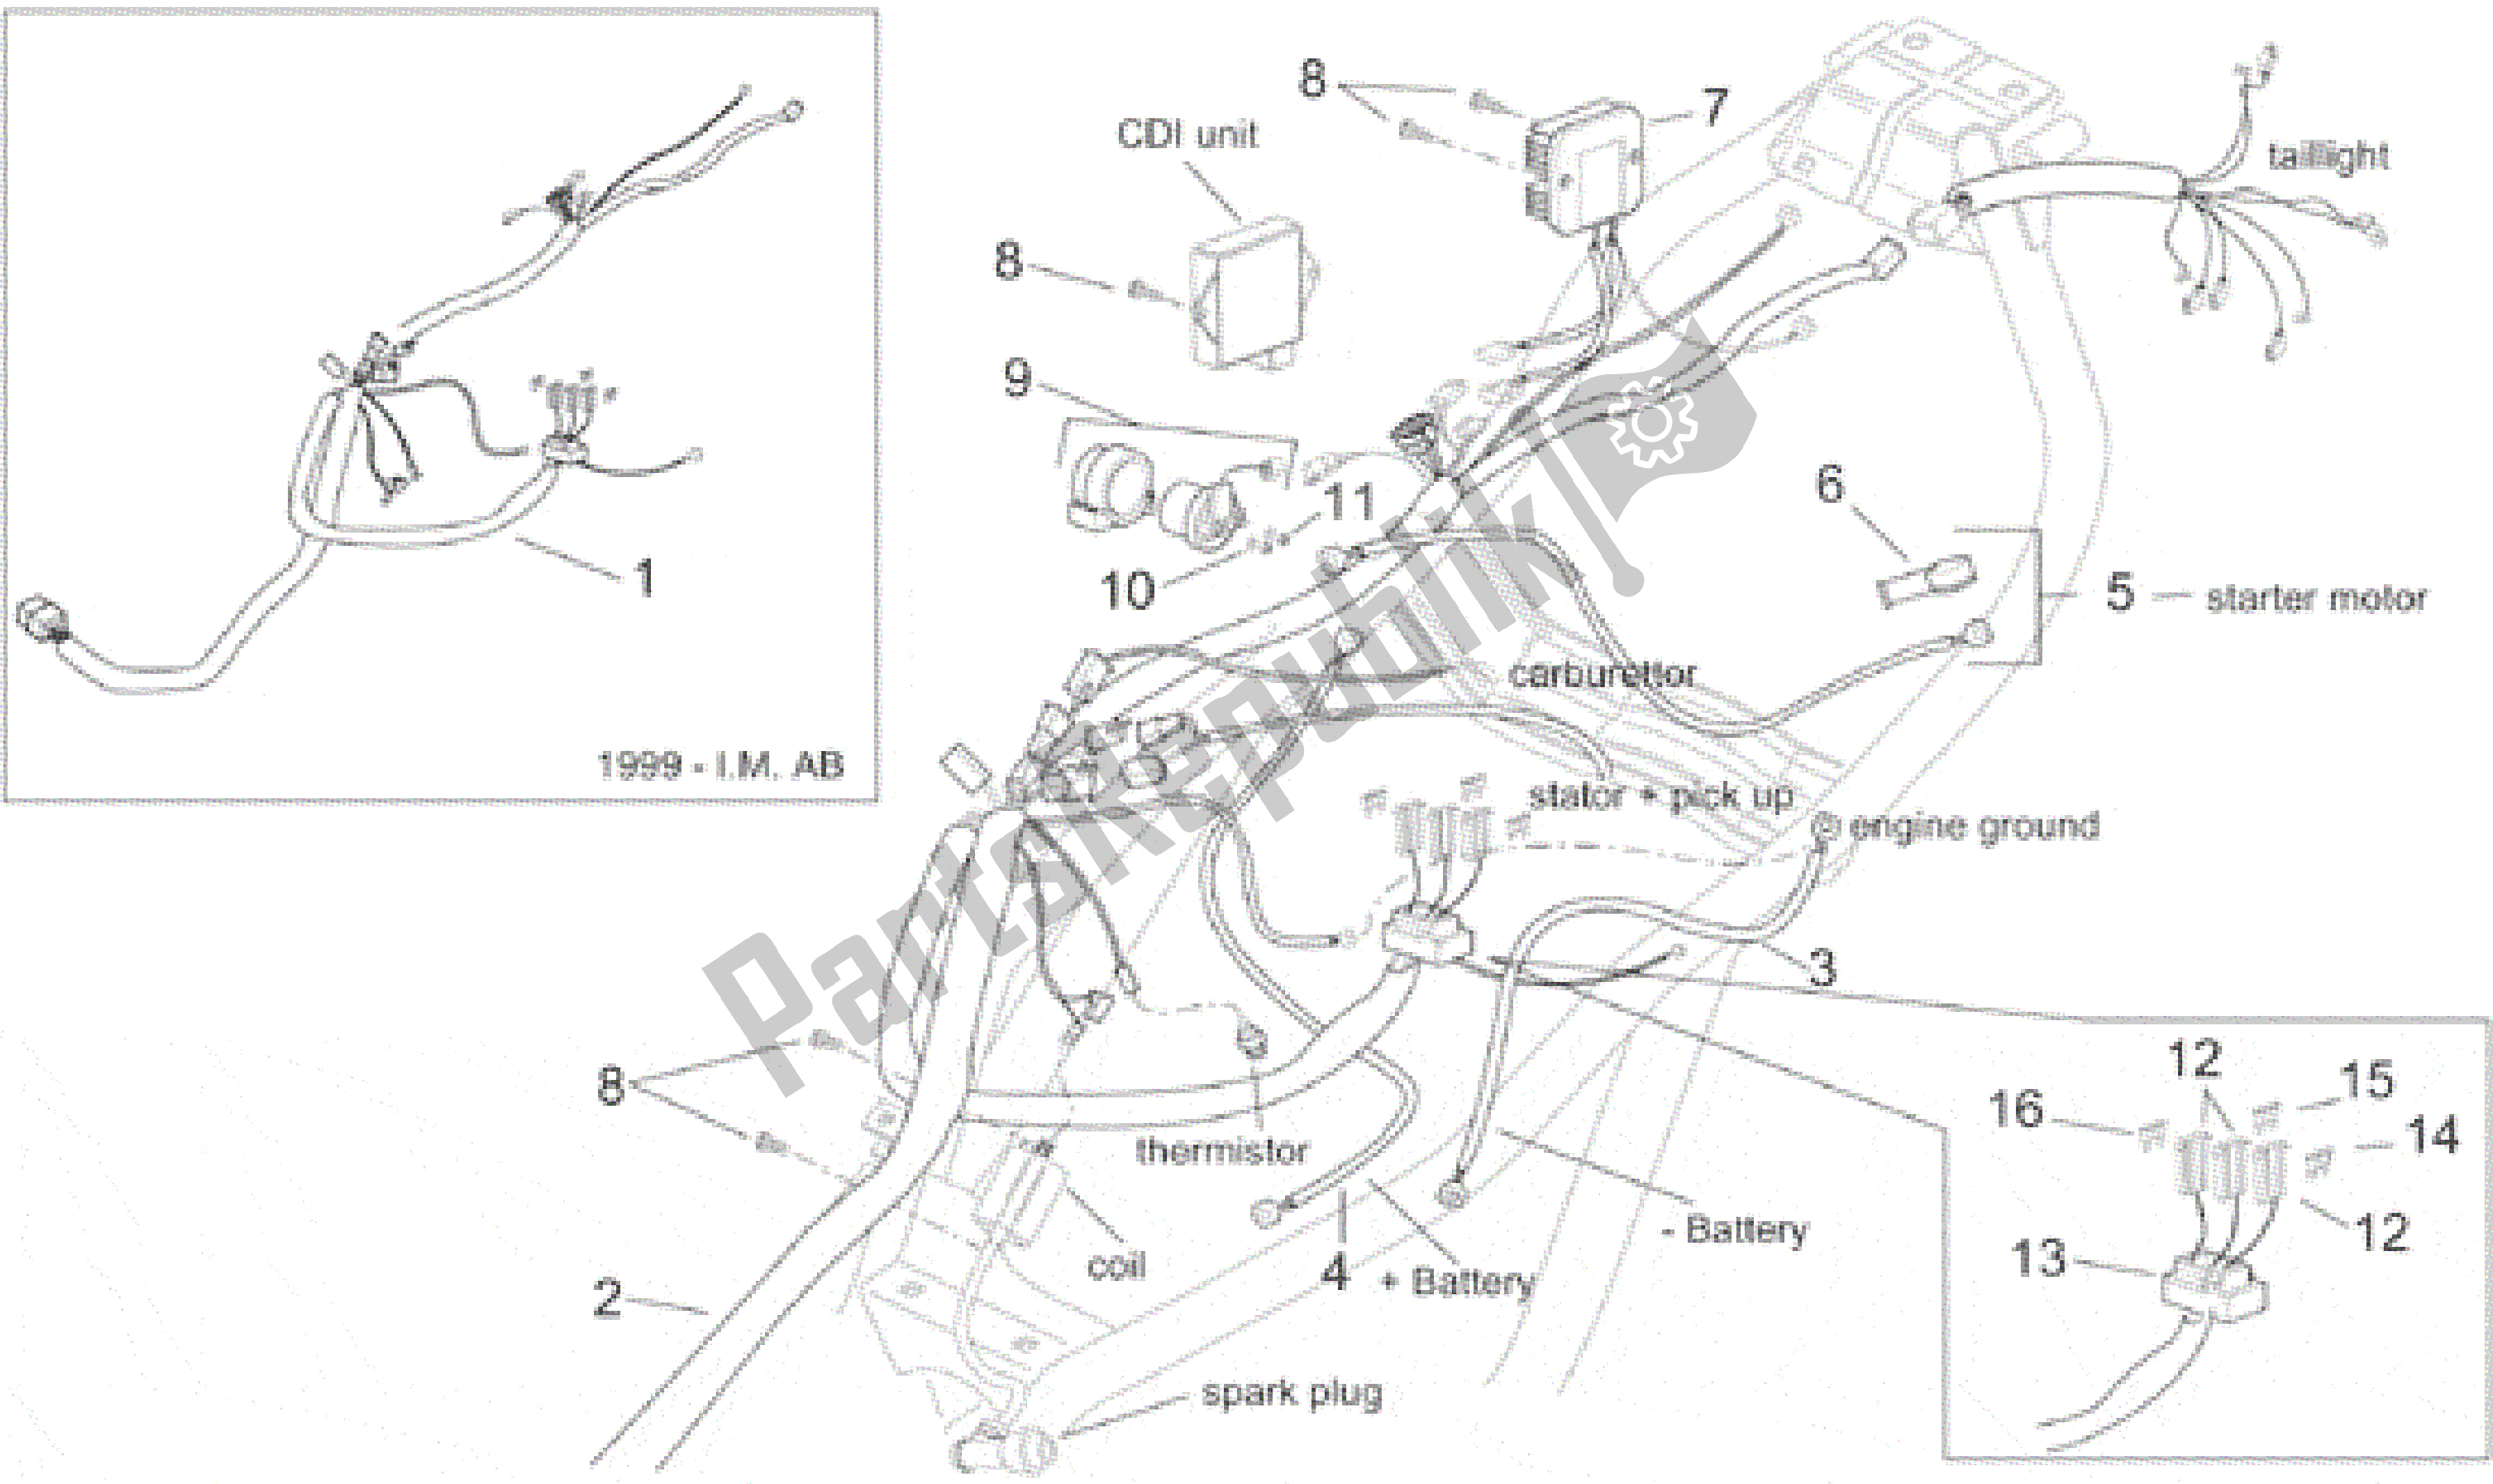 All parts for the Electrical System Ii of the Aprilia Leonardo 125 1999 - 2001